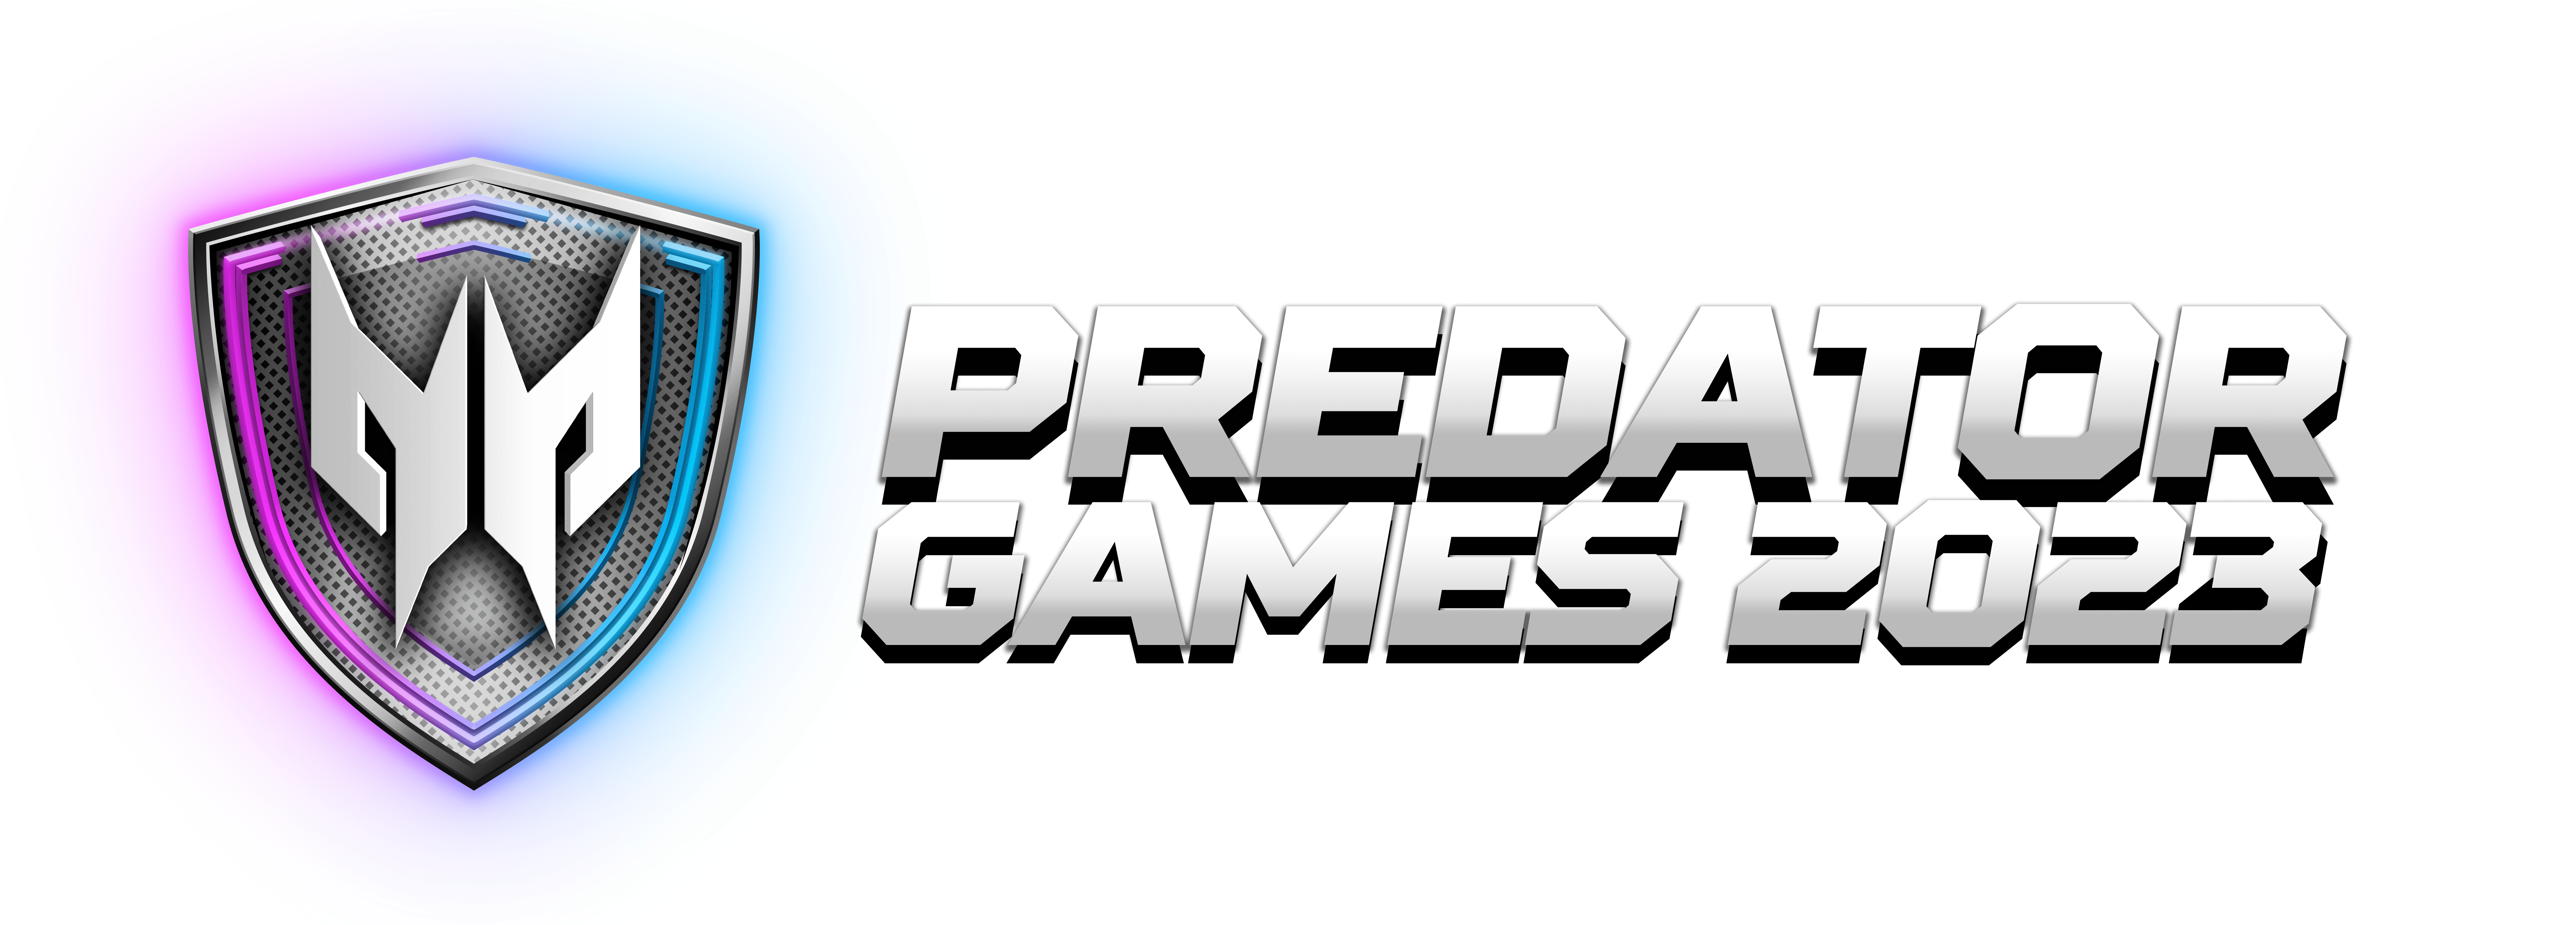 Predator Games 2022